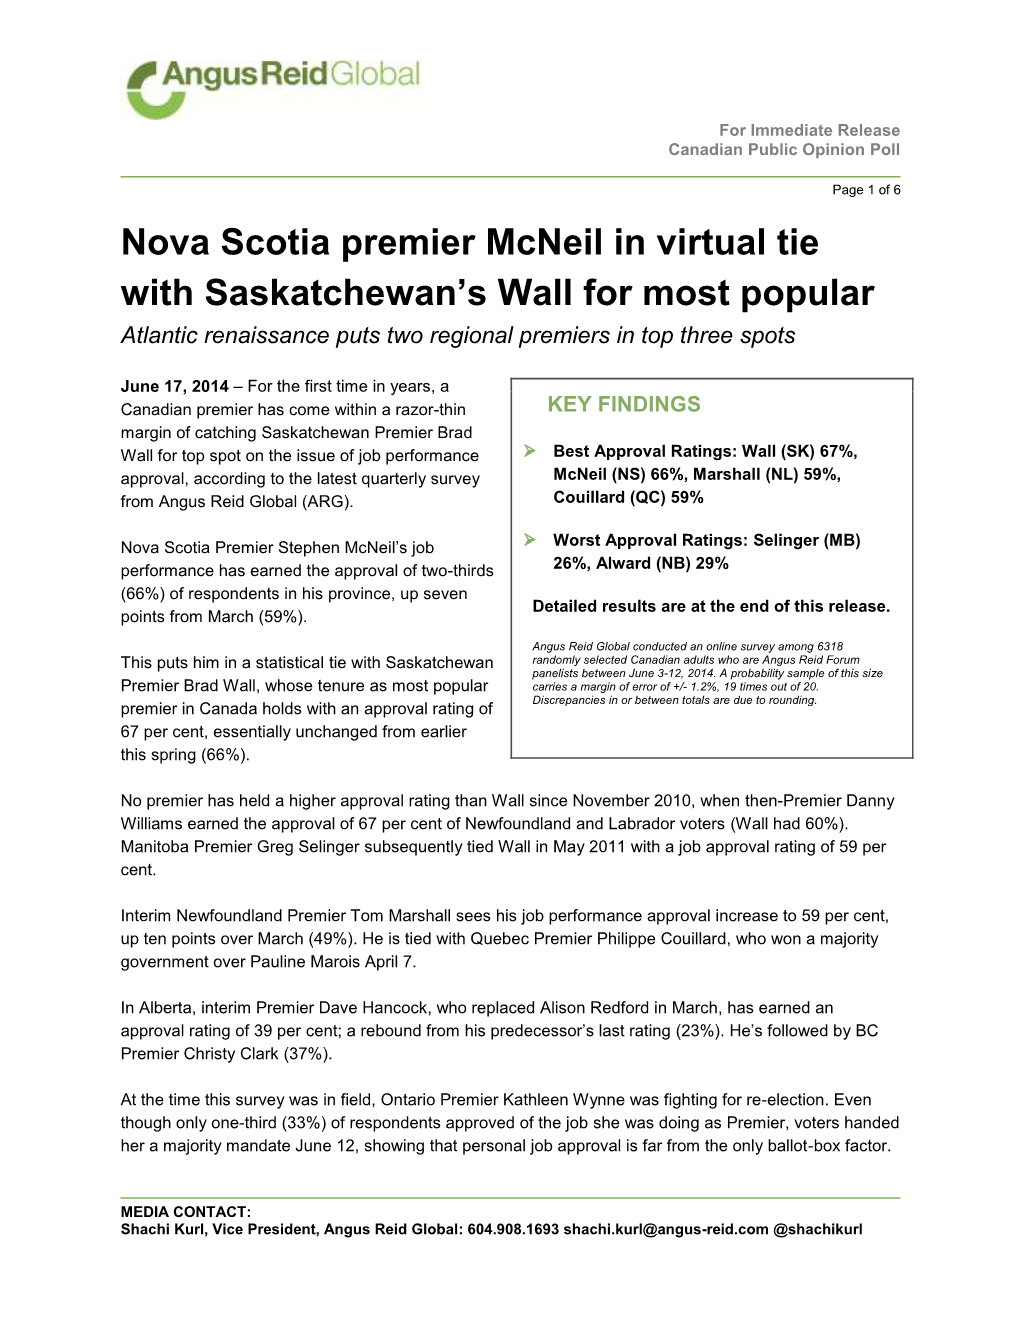 Nova Scotia Premier Mcneil in Virtual Tie with Saskatchewan's Wall For